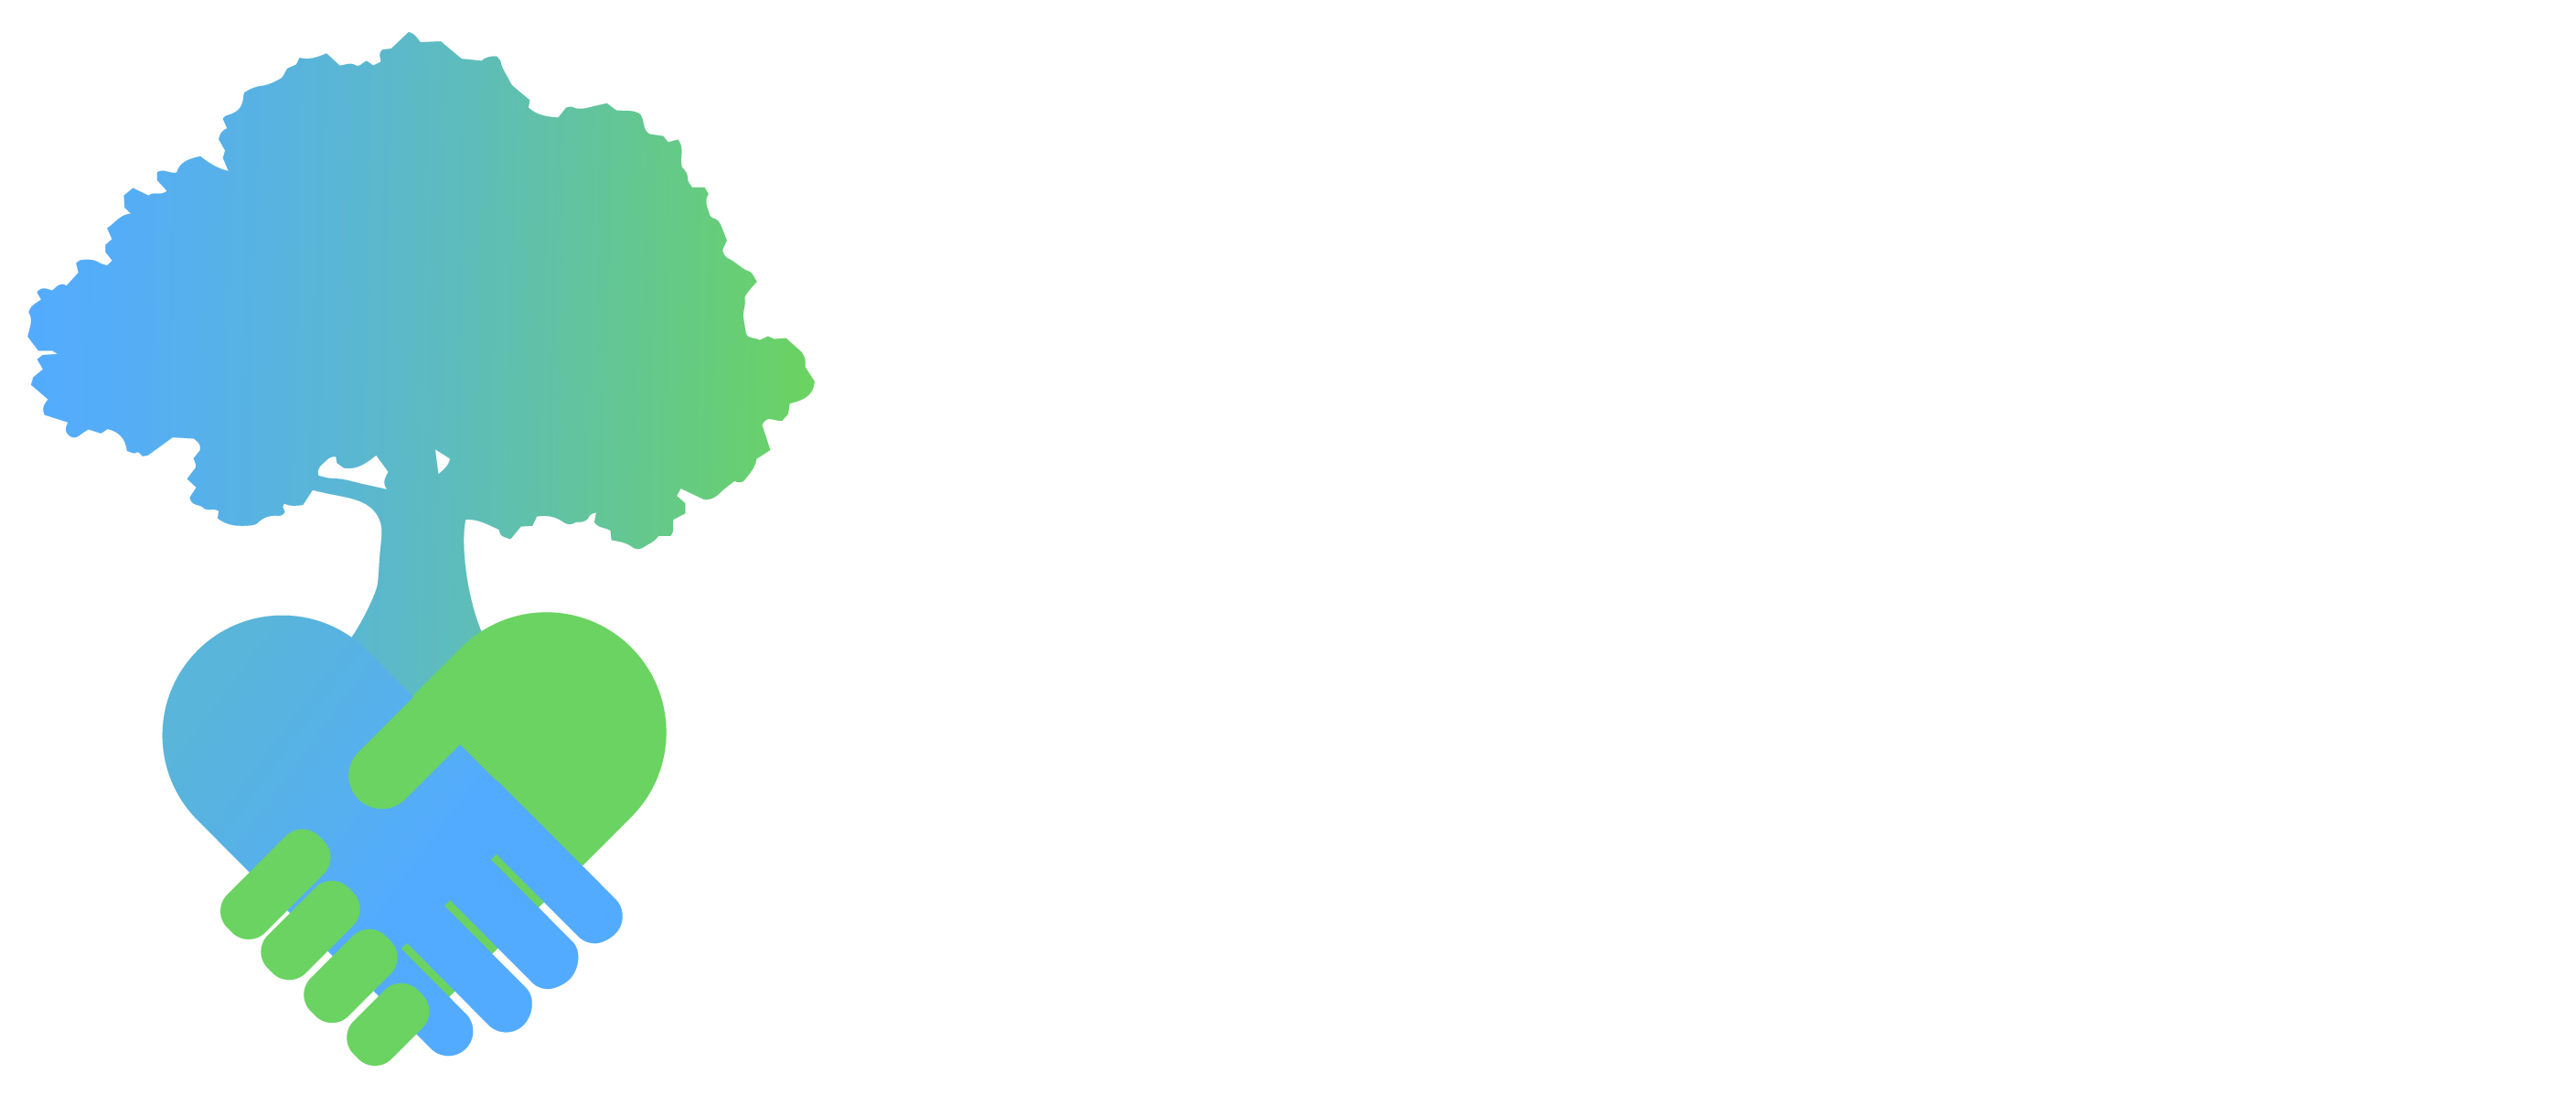 Ideal Strategic Partners